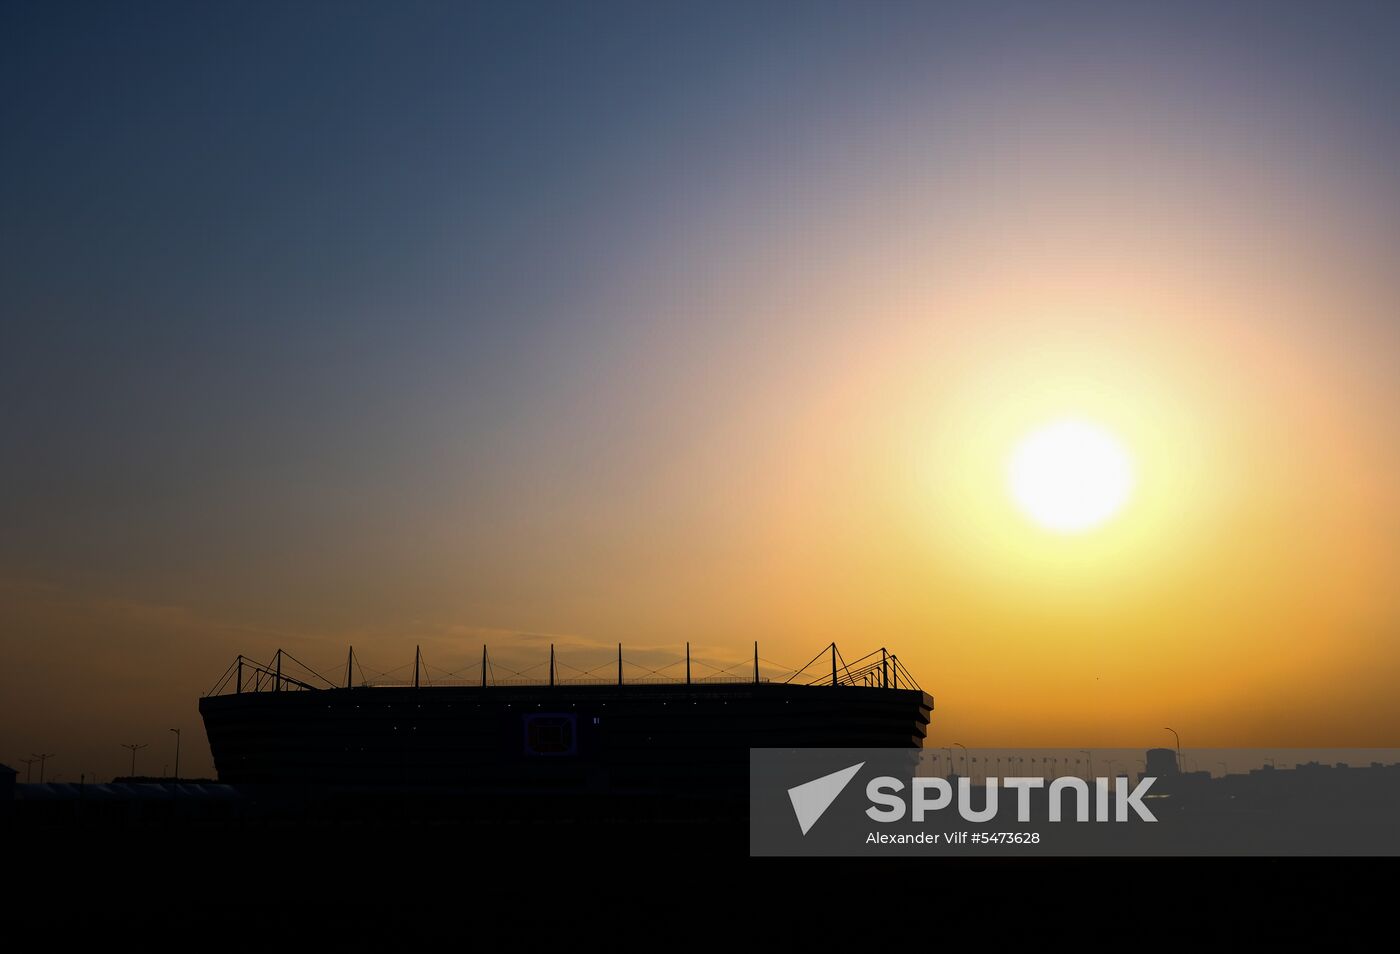 Football. Kaliningrad Stadium hosts first official match